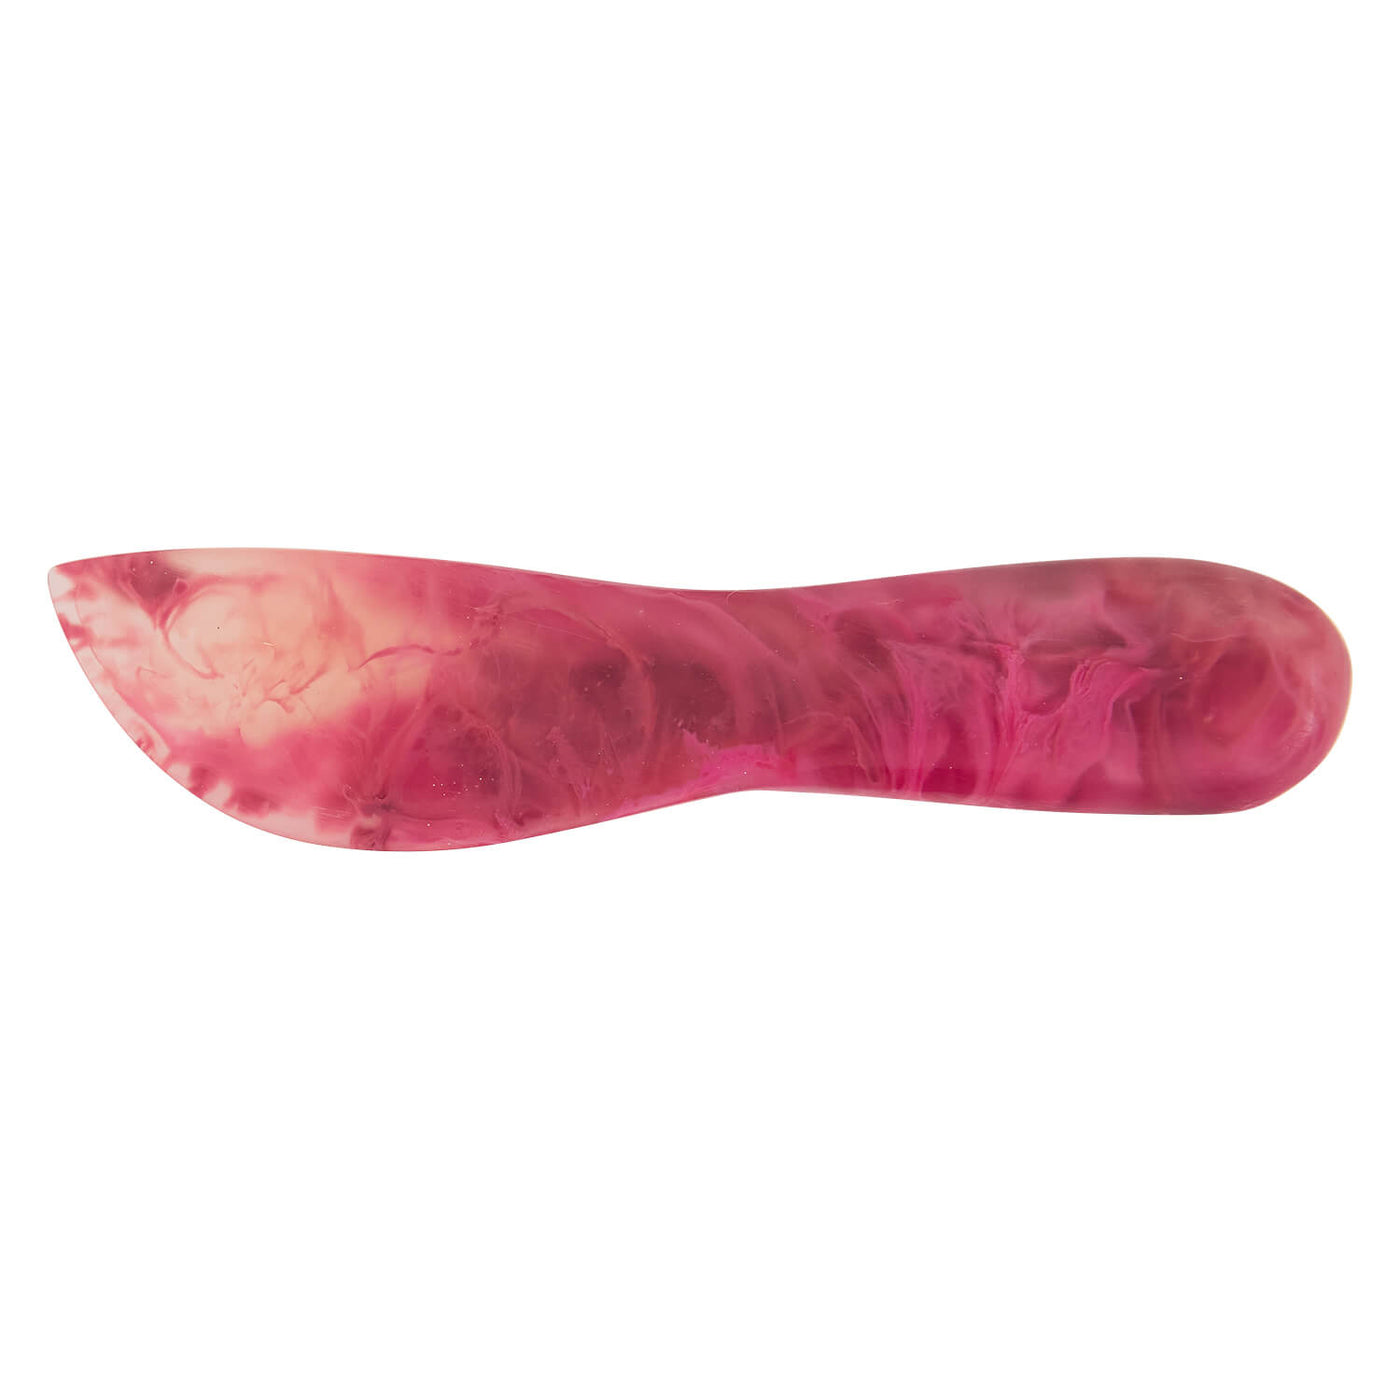 Frances Spreader Knife - Rhubarb